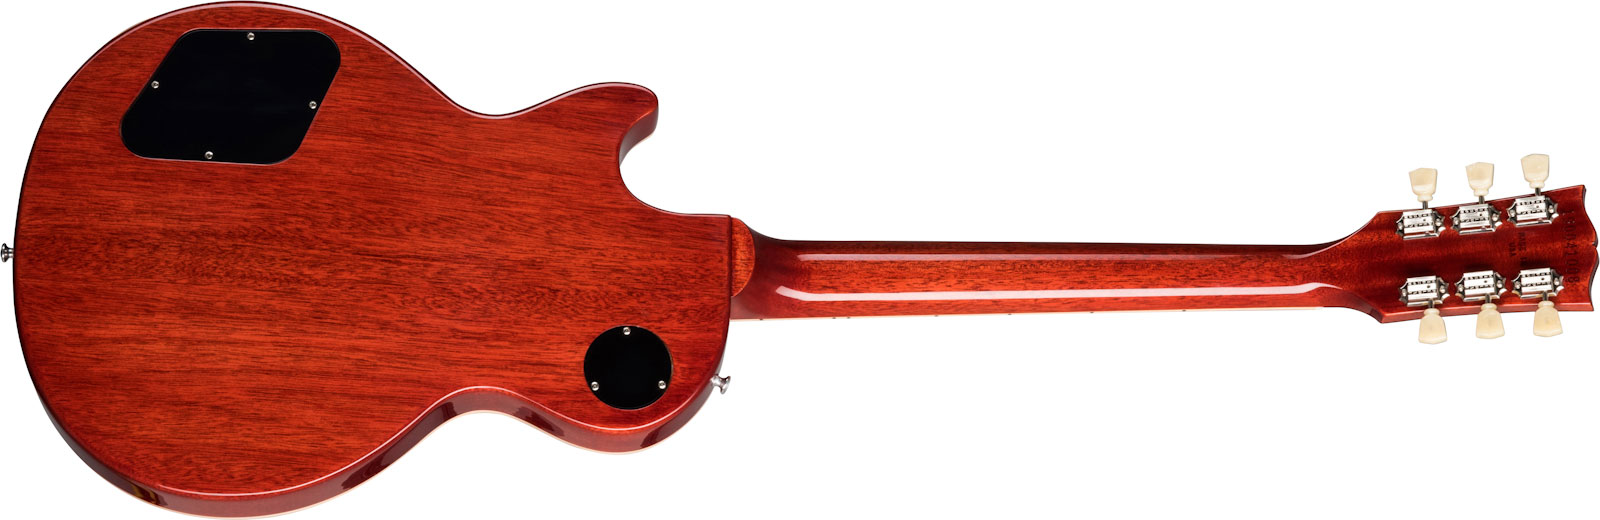 Gibson Les Paul Standard 50s 2h Ht Rw - Heritage Cherry Sunburst - Single cut electric guitar - Variation 1